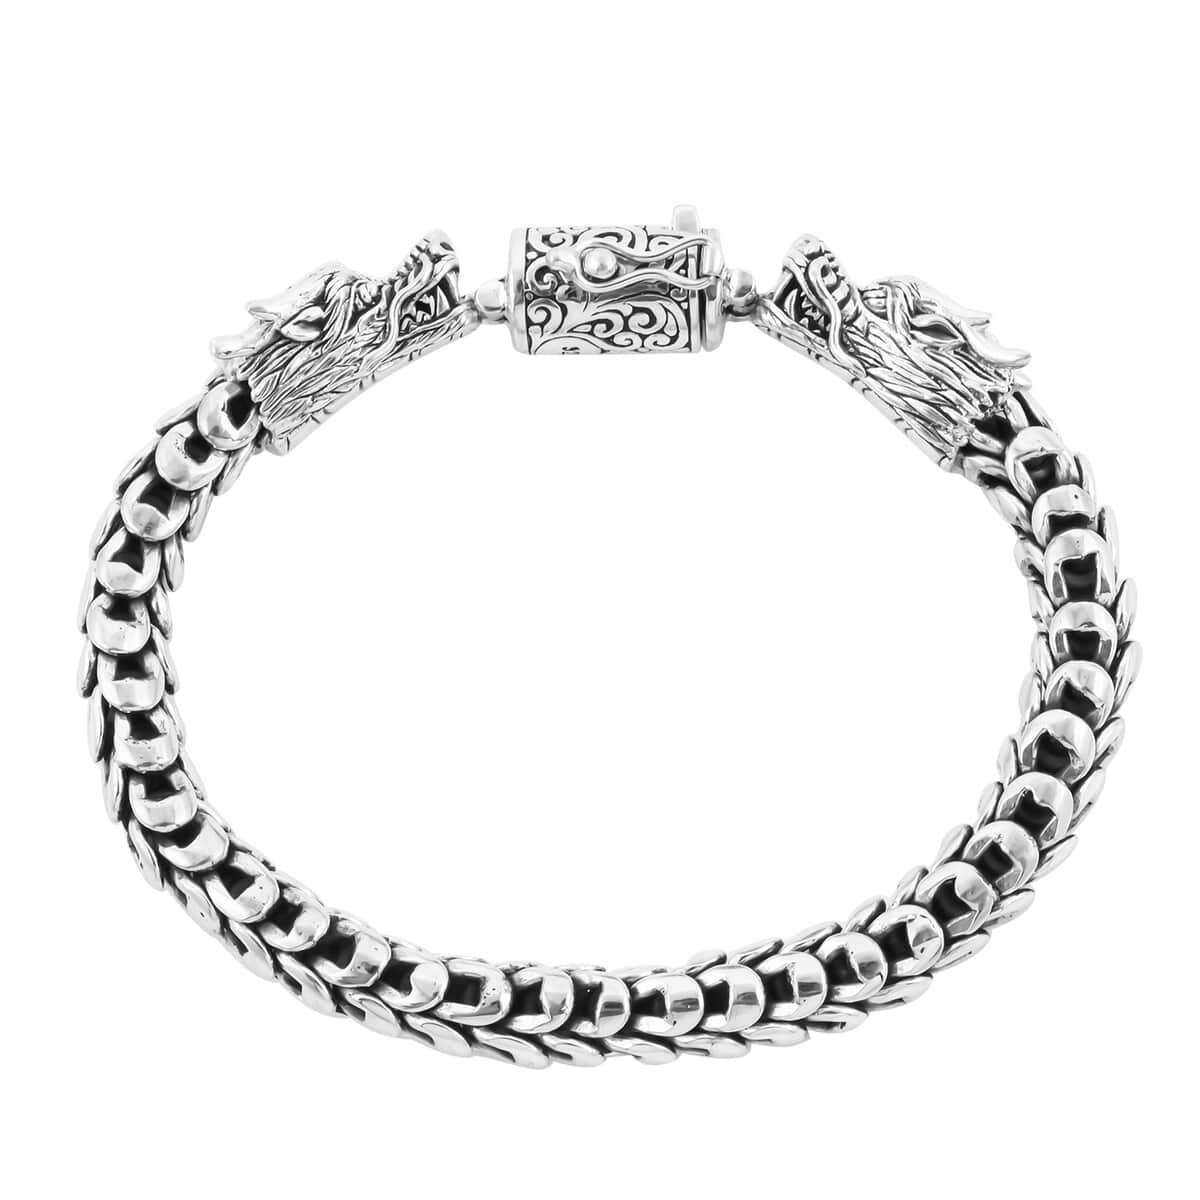 BALI LEGACY Sterling Silver Double Dragon Head Bracelet (7.00 In) 34.40 Grams image number 3